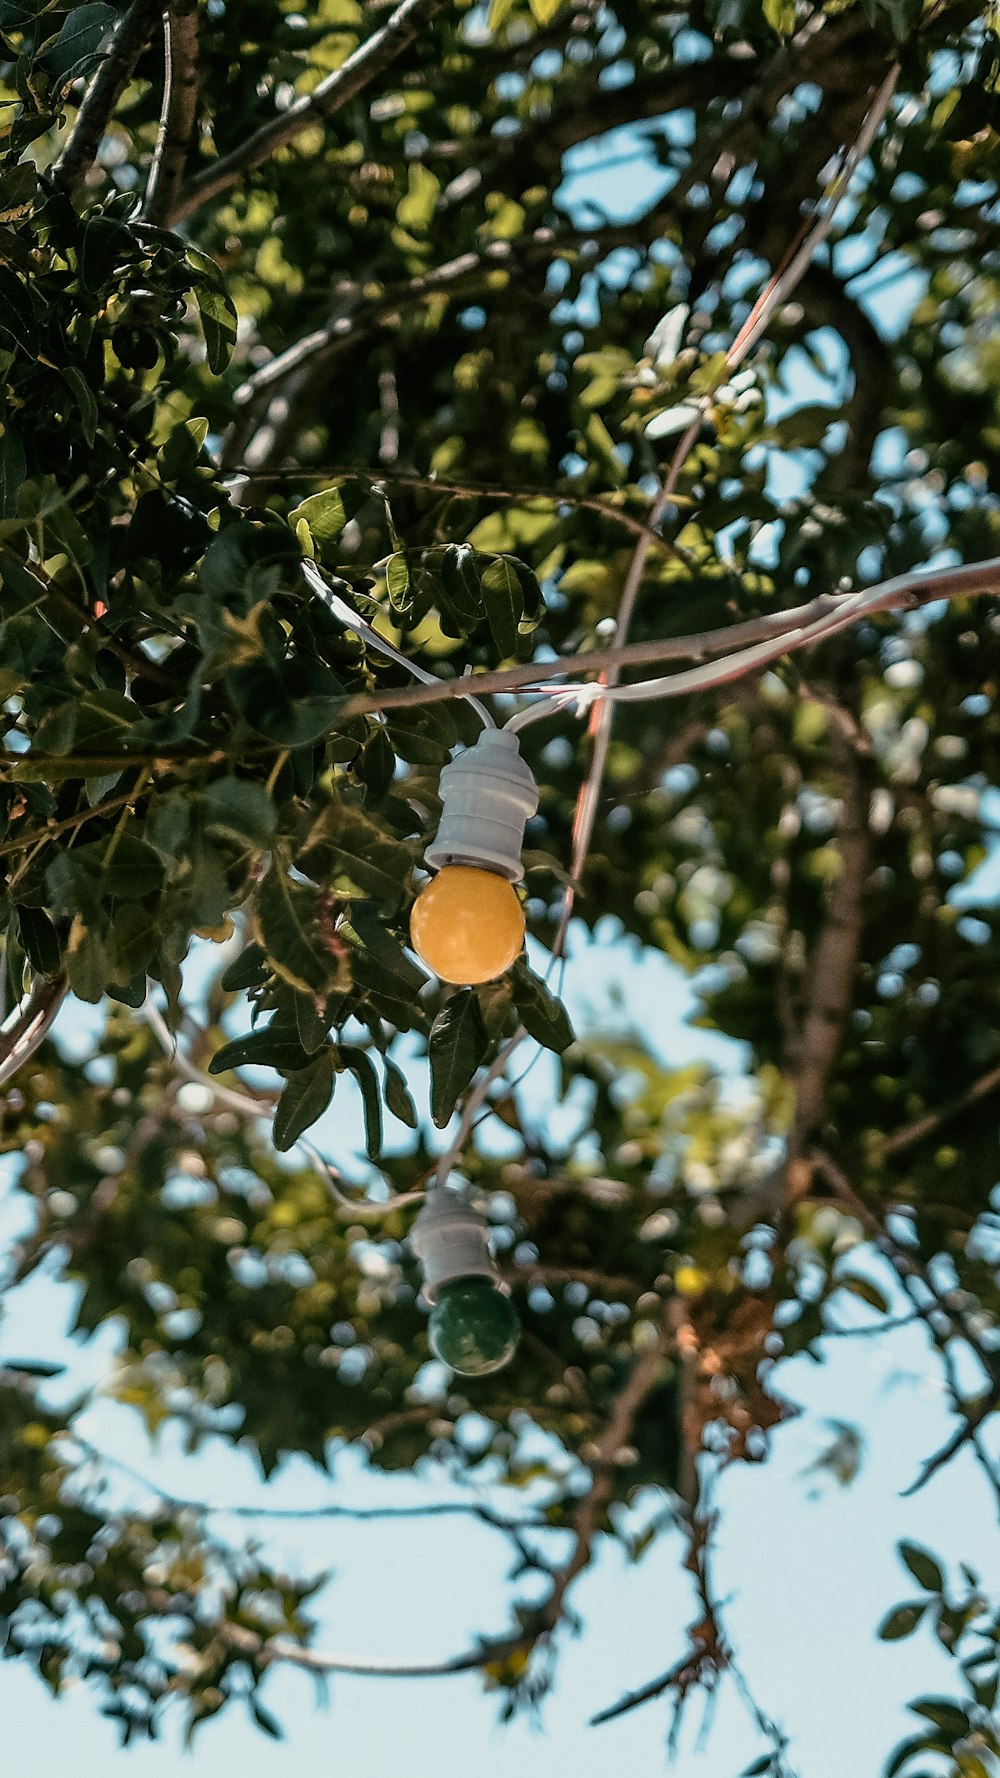 yellow round fruit on tree during daytime